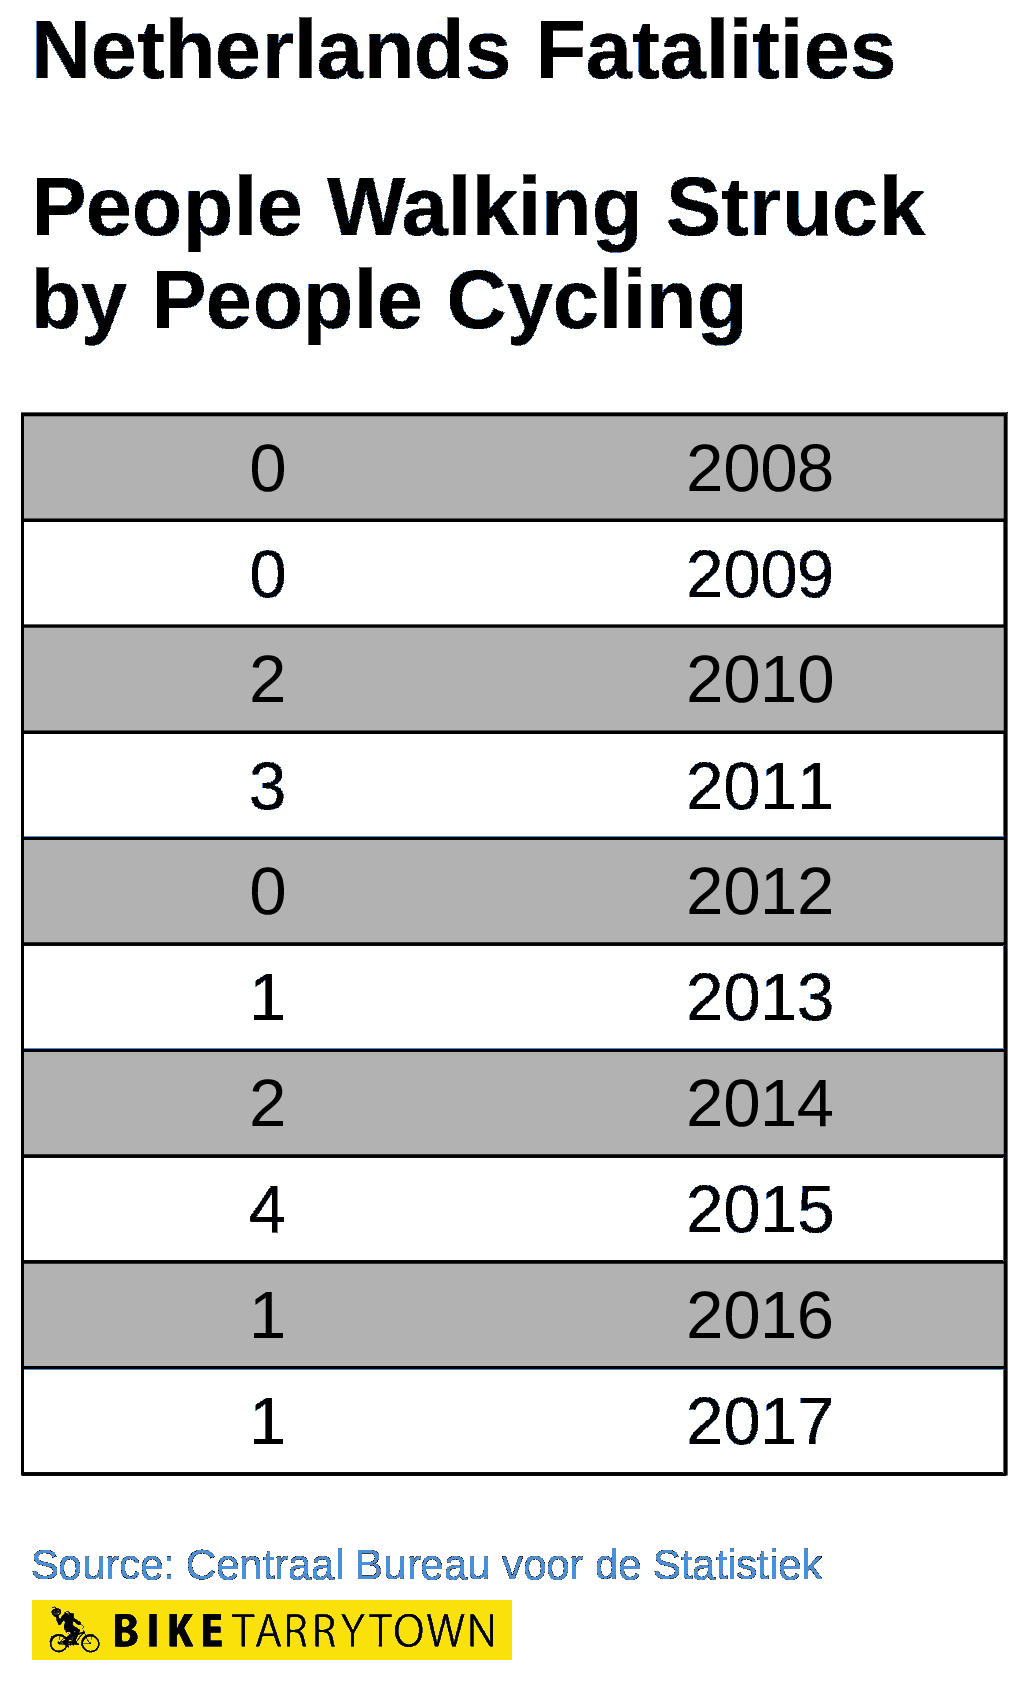 Netherlands Fatalities: People Walking Struck by People Cycling. 2008 = 0, 2009 = 0, 2010 = 2, 2011 = 3, 2012 = 0, 2013 = 1, 2014 = 2, 2015 = 4, 2016 = 1, 2017 = 1.